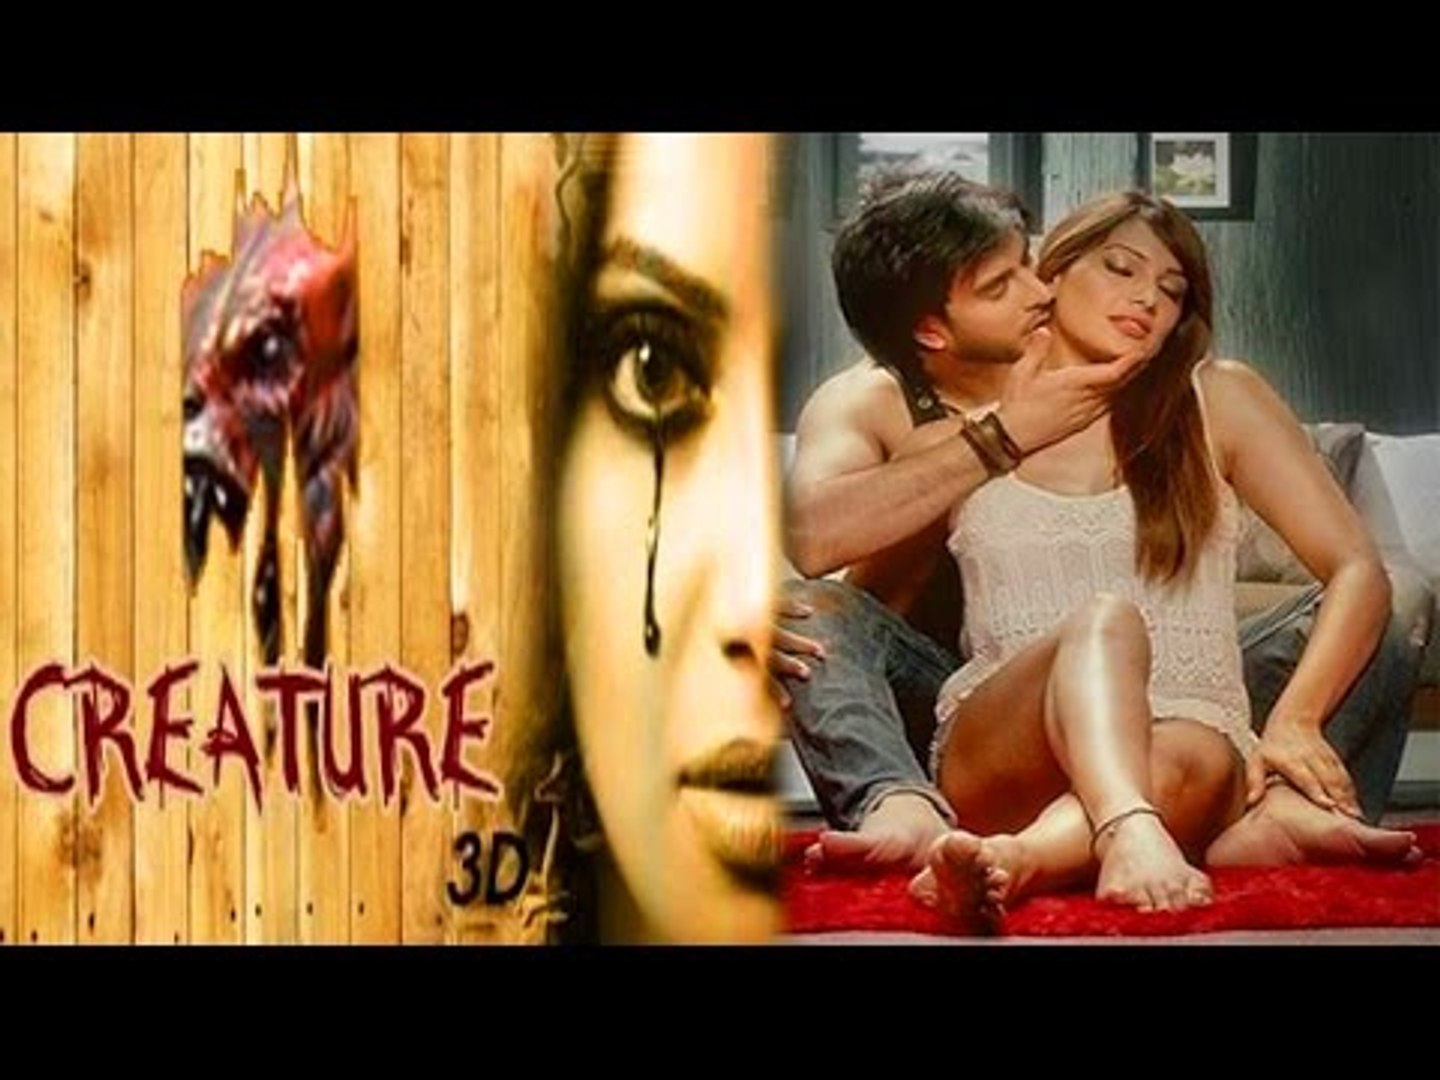 Spicy Scenes In Creature 3d Arijit Singh, Bipasha Basu Latest Bollywood News